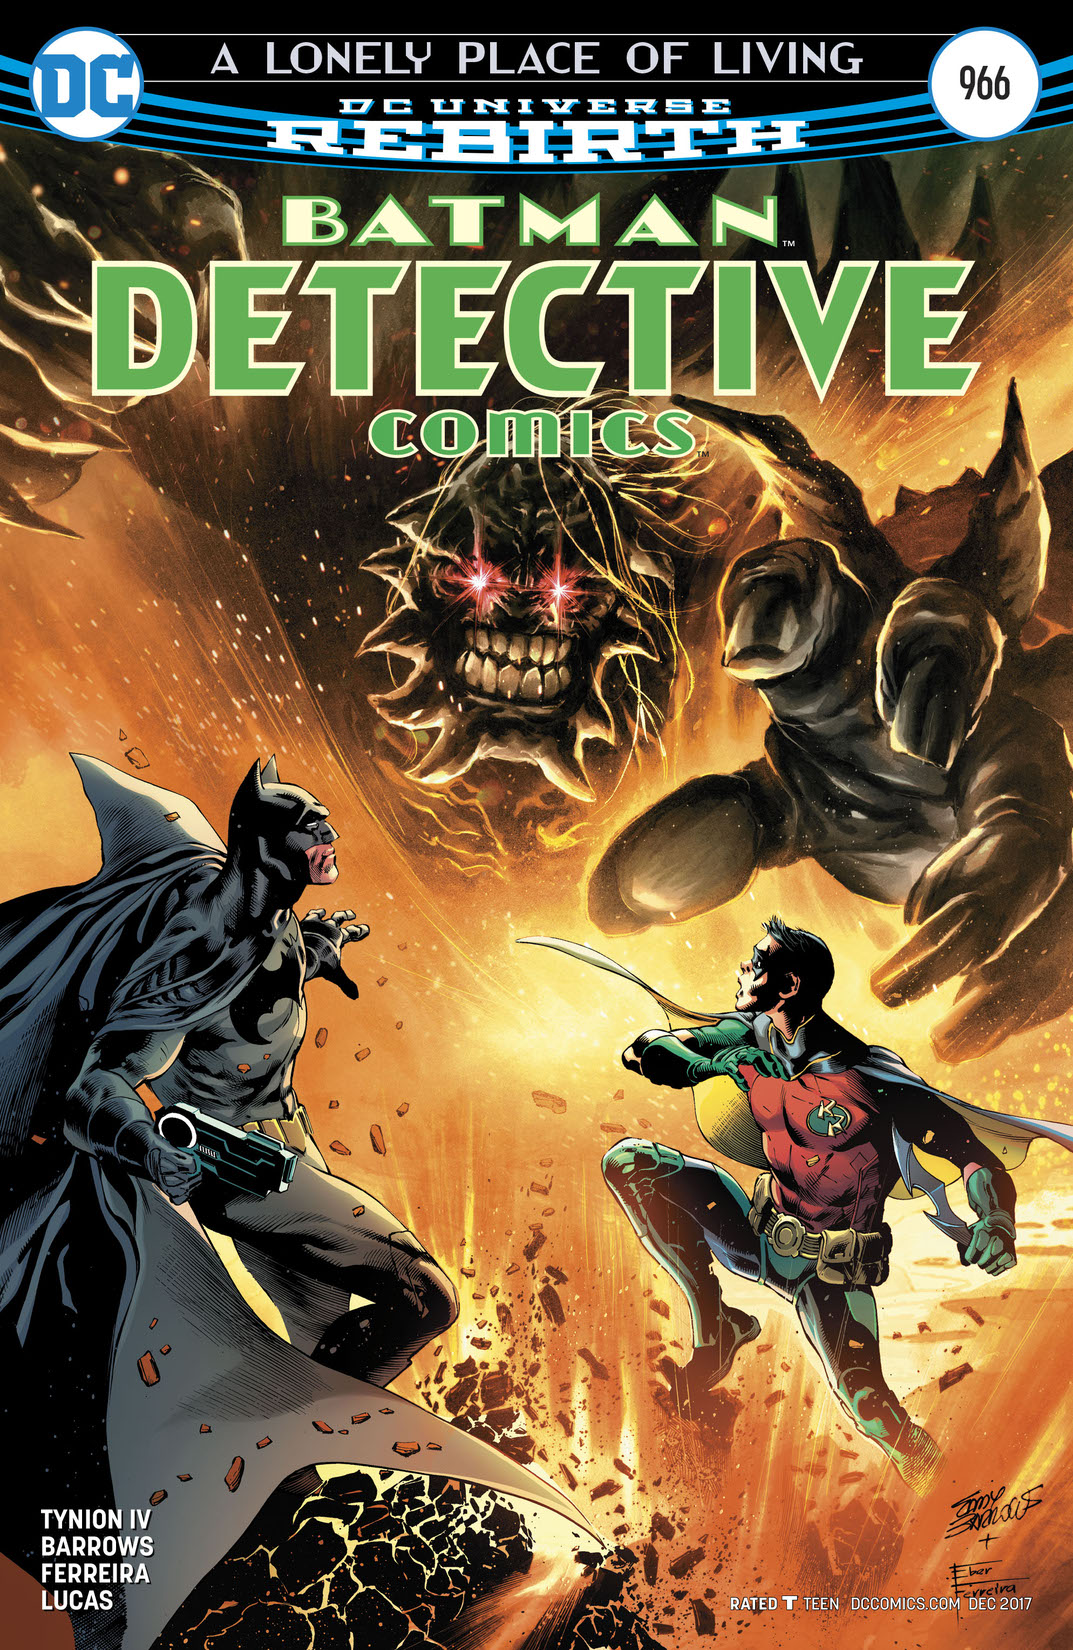 Detective Comics (2016-) #966 preview images